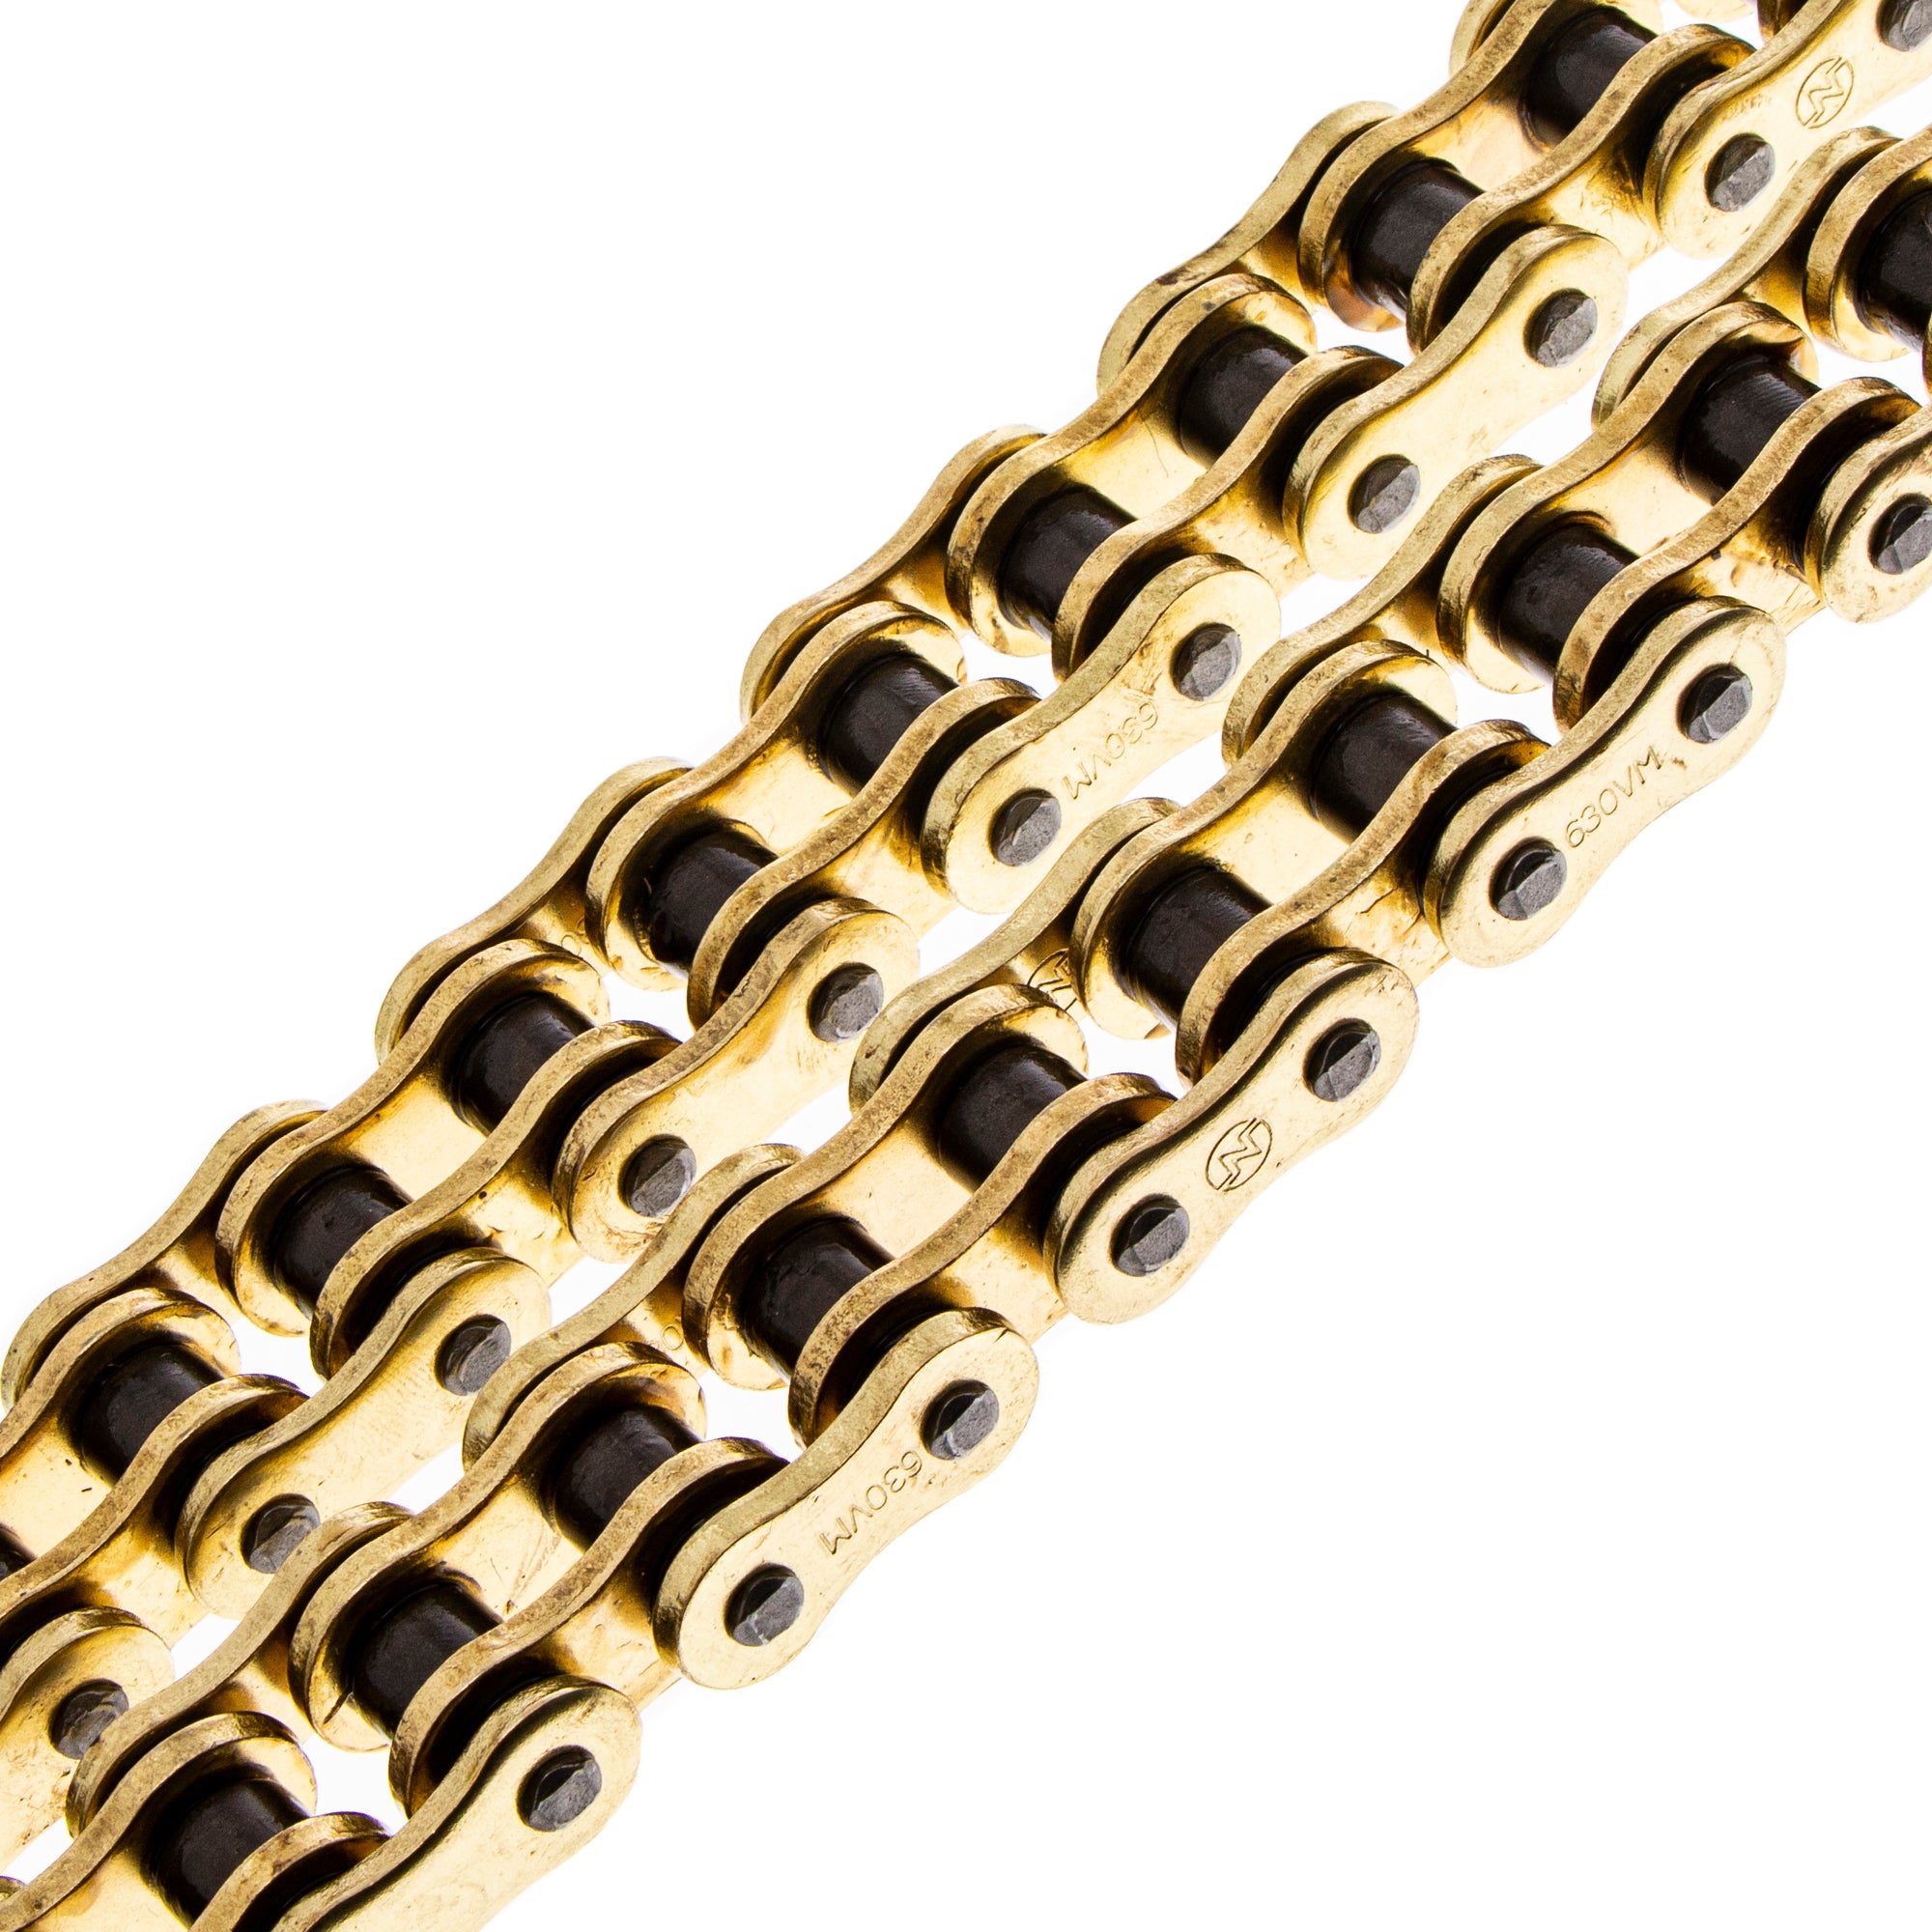 Gold X-Ring Chain 88 w/ Master Link for zOTHER KZ750L KZ700A GPz750 CB750K 5465 NICHE 519-CDC2576H